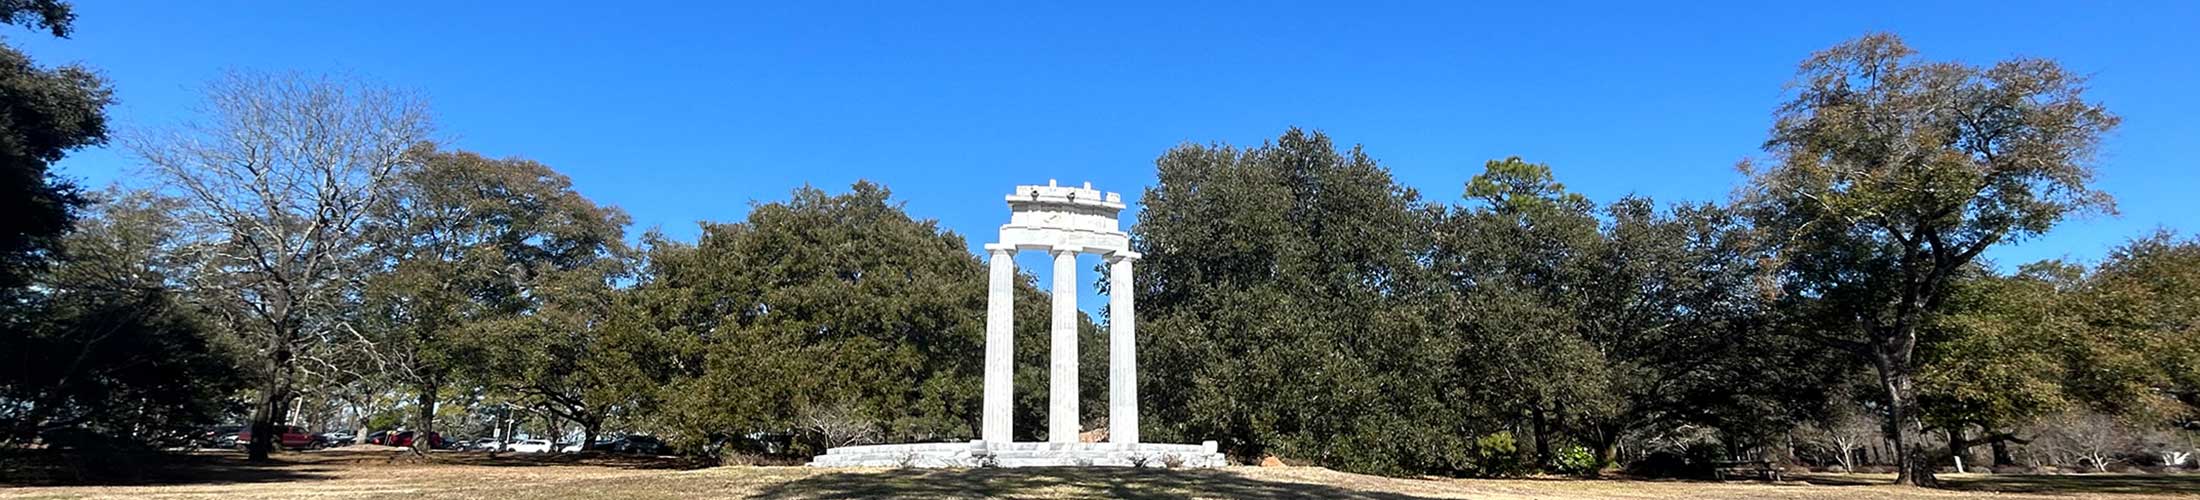 Tholos Delphi statue on campus.